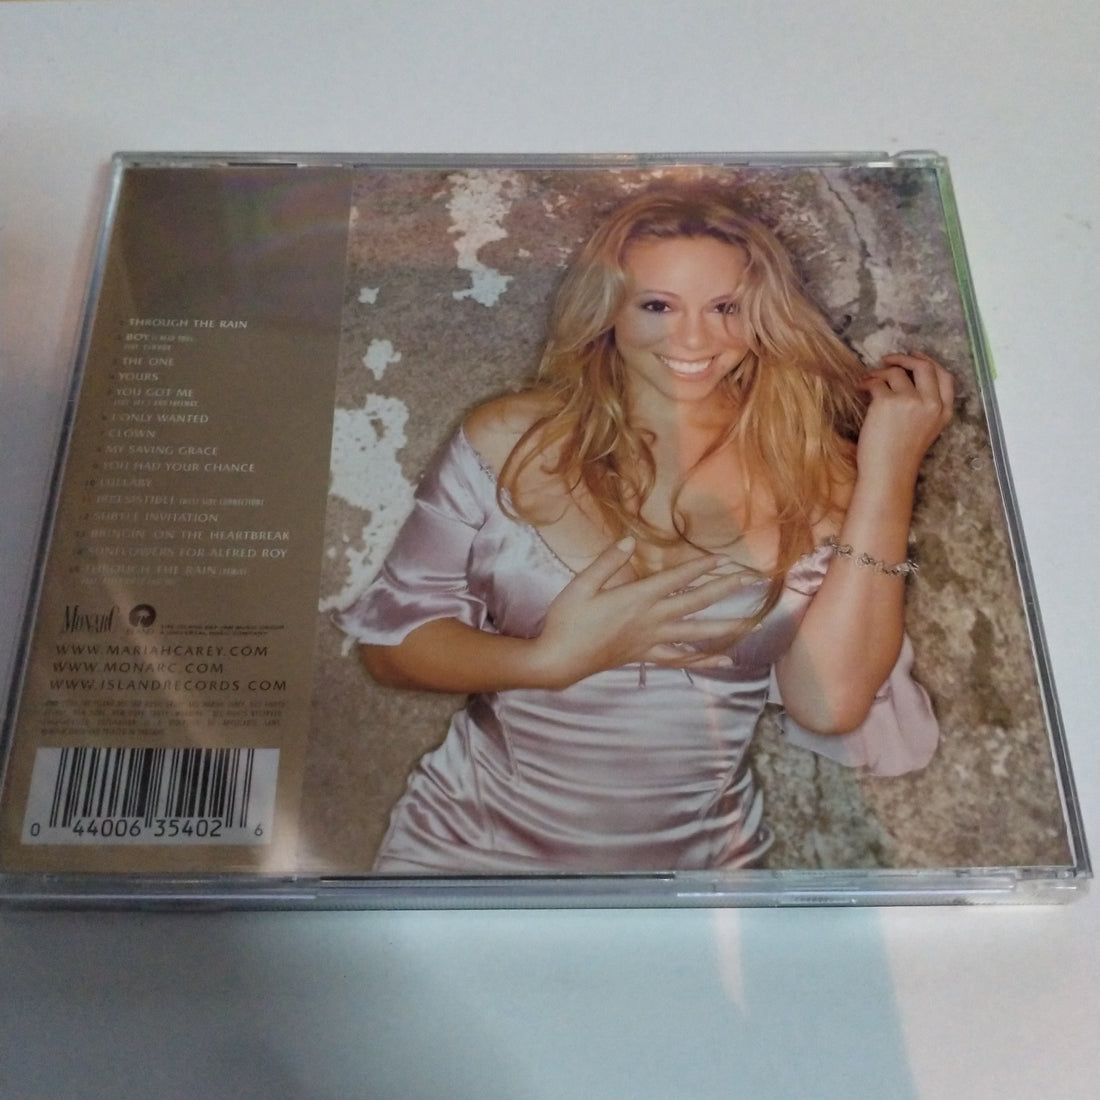 Mariah Carey - Charmbracelet (CD) (VG+)